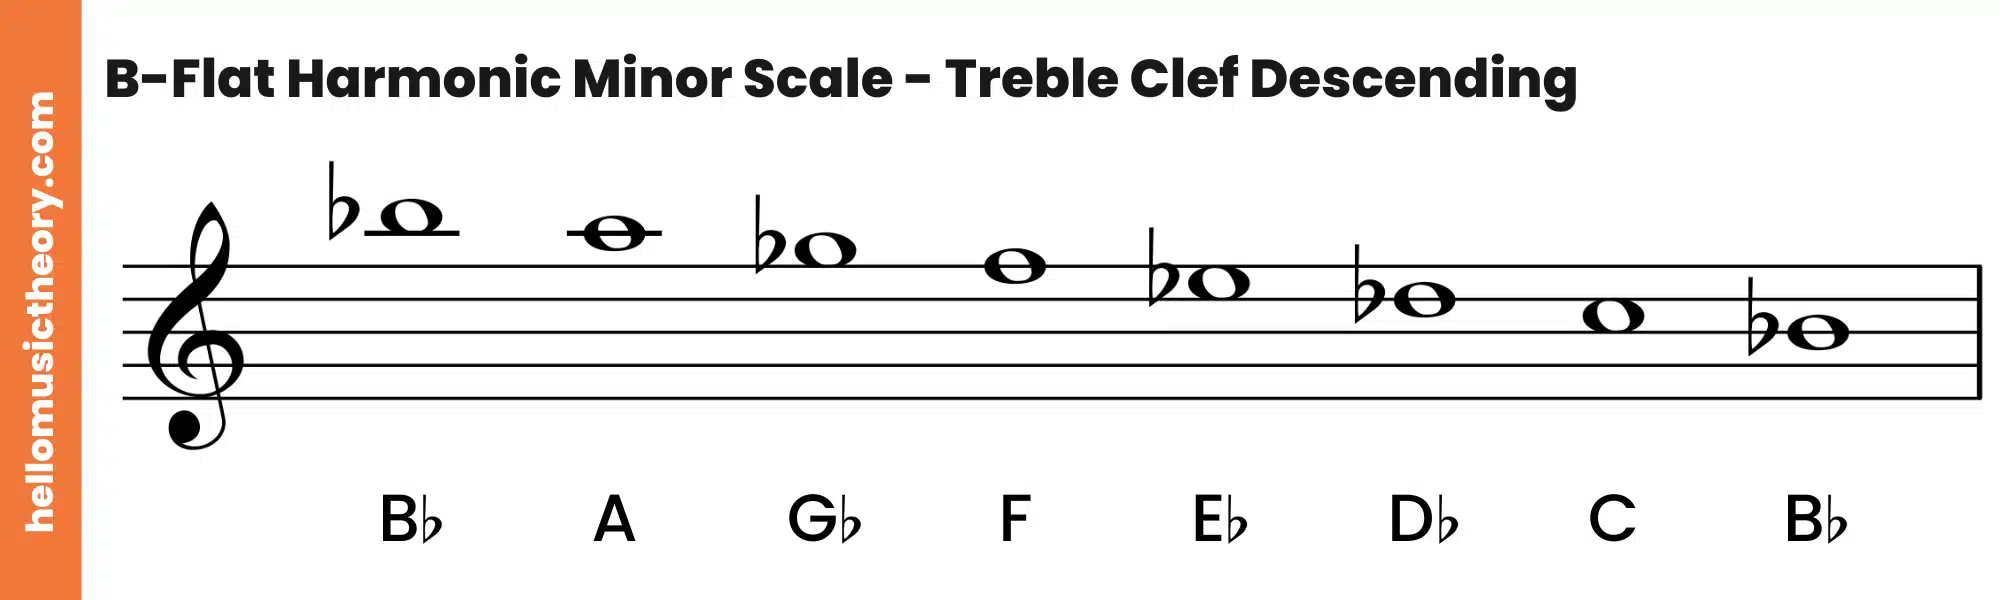 B-Flat Harmonic Minor Scale Treble Clef Descending